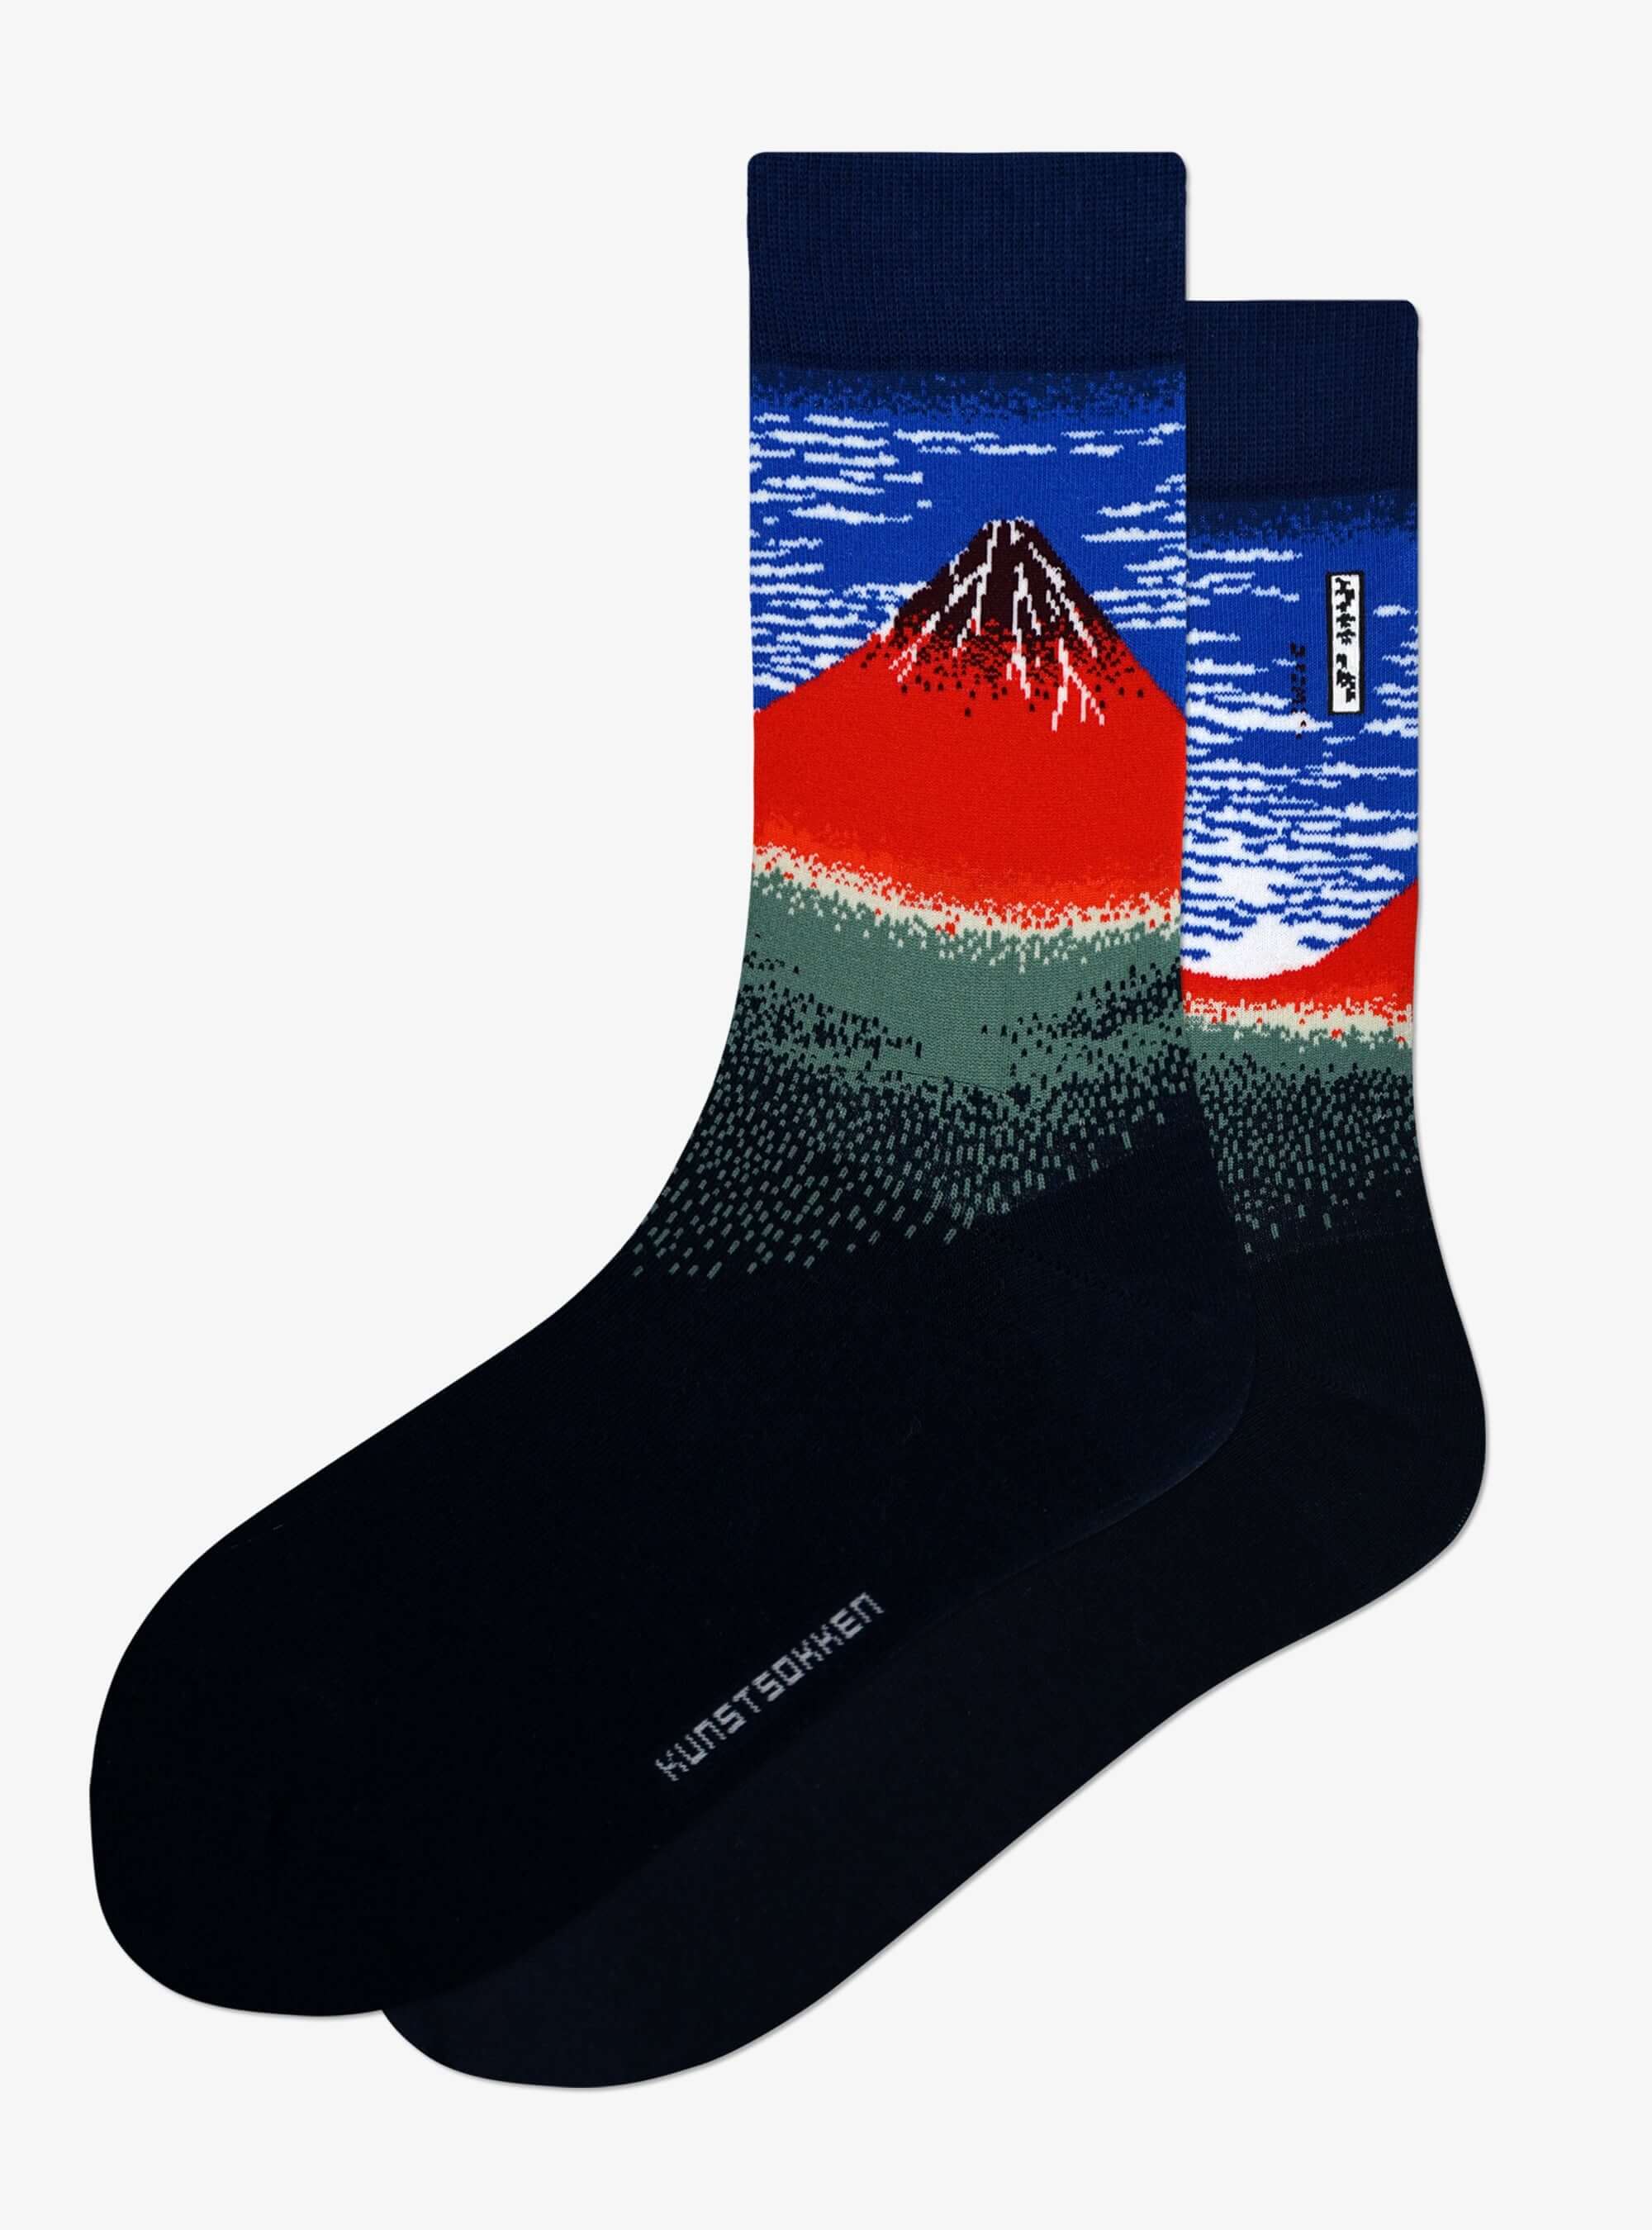 Roten Fuji